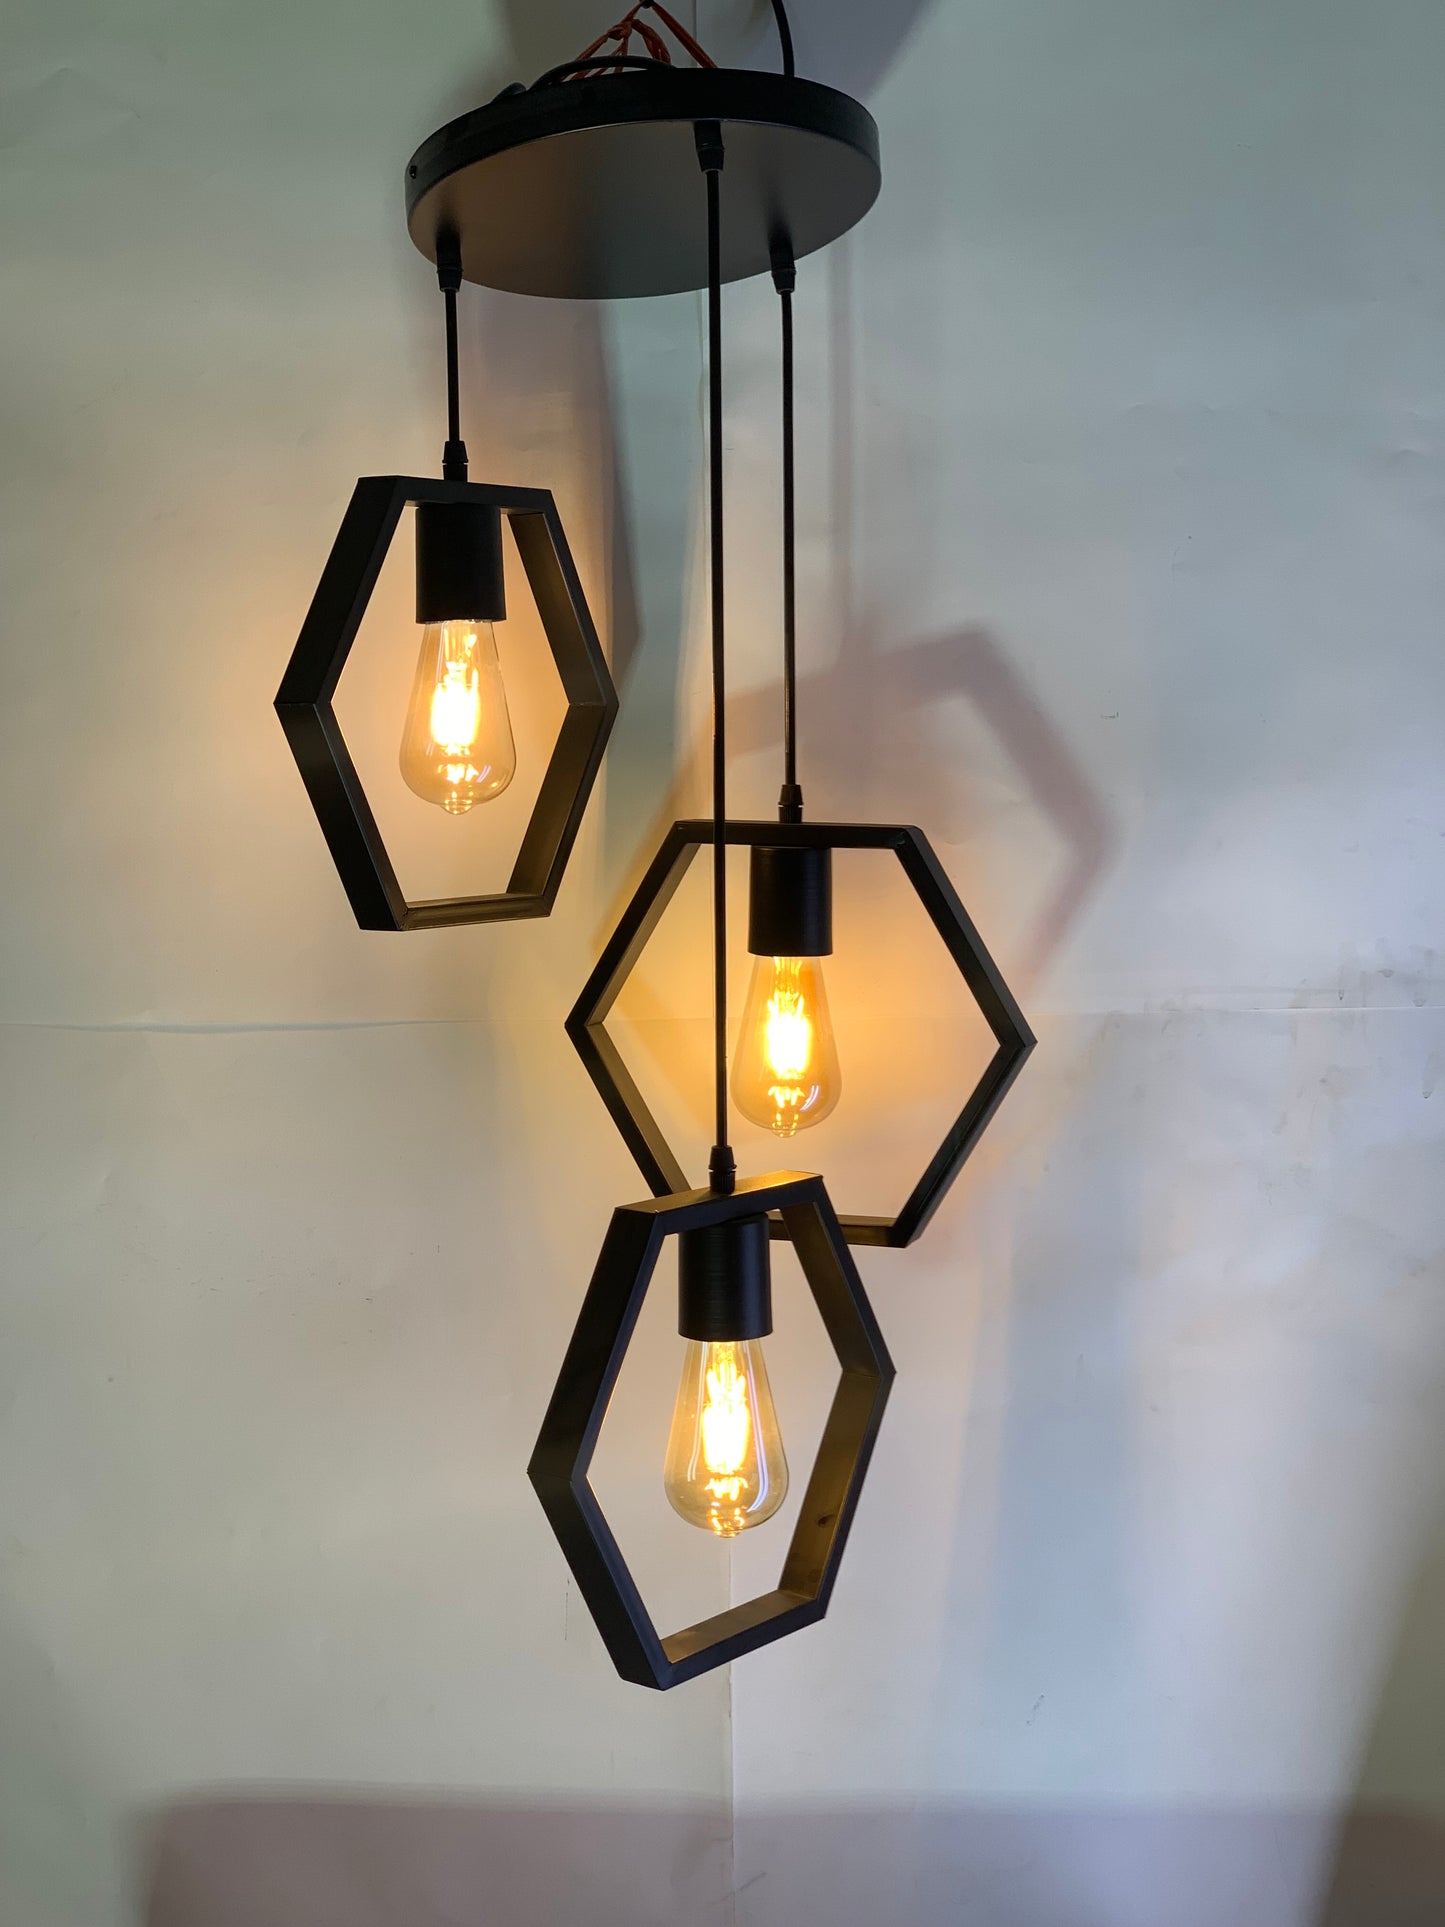 SKU: 329-Hexagonal Metallic Hanging Light